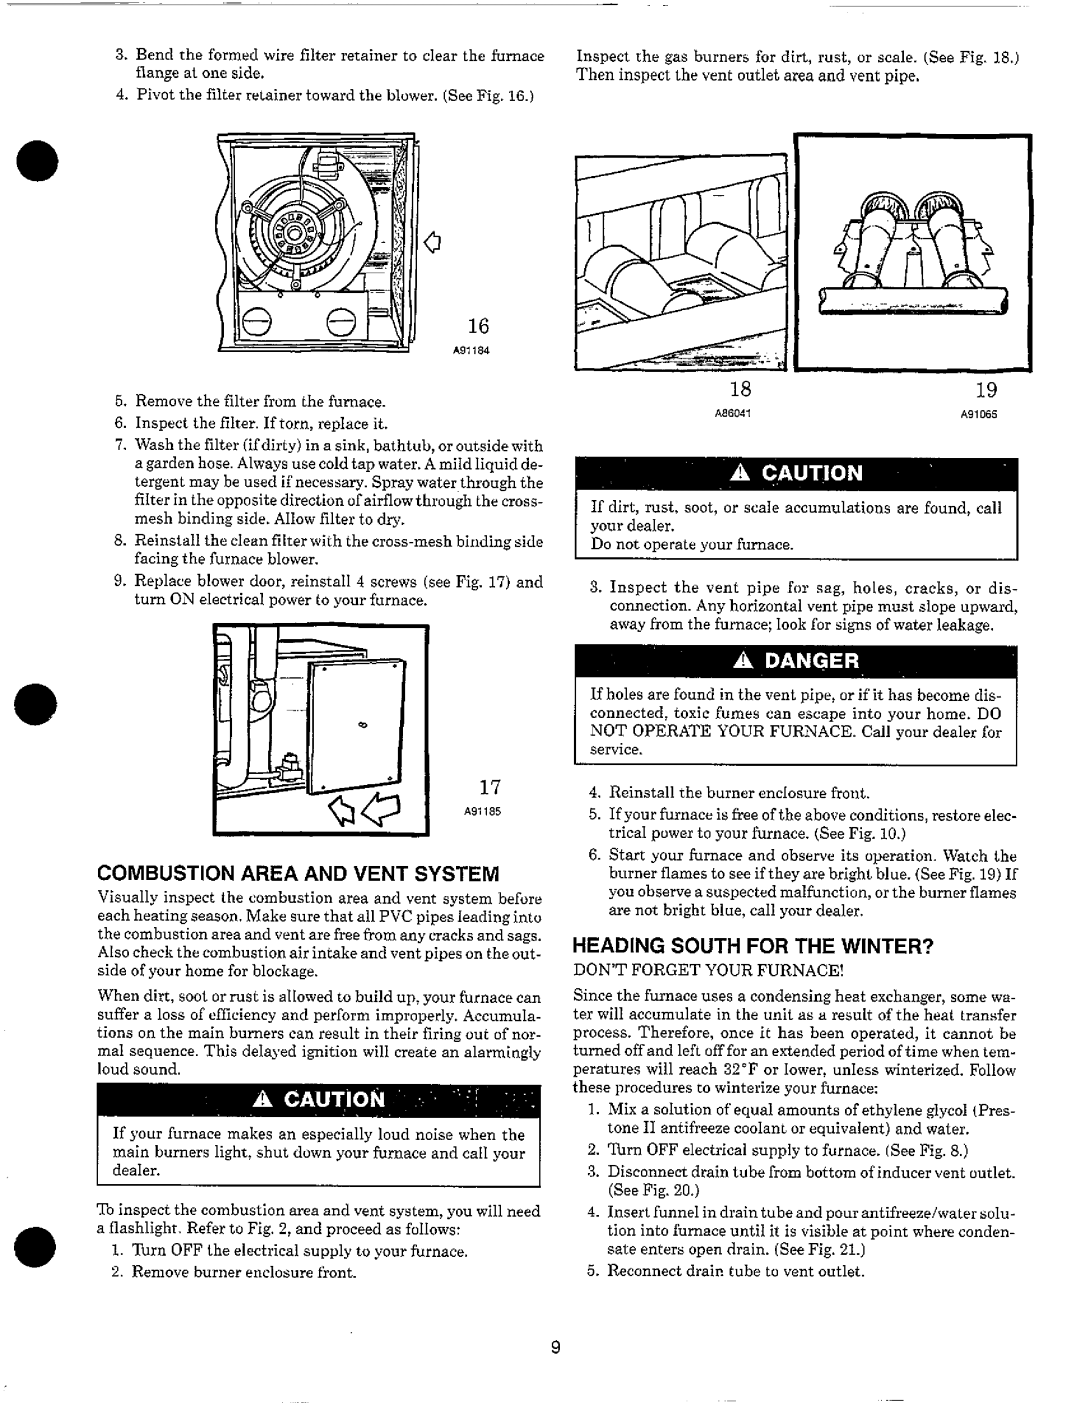 Carrier 58EJA manual 